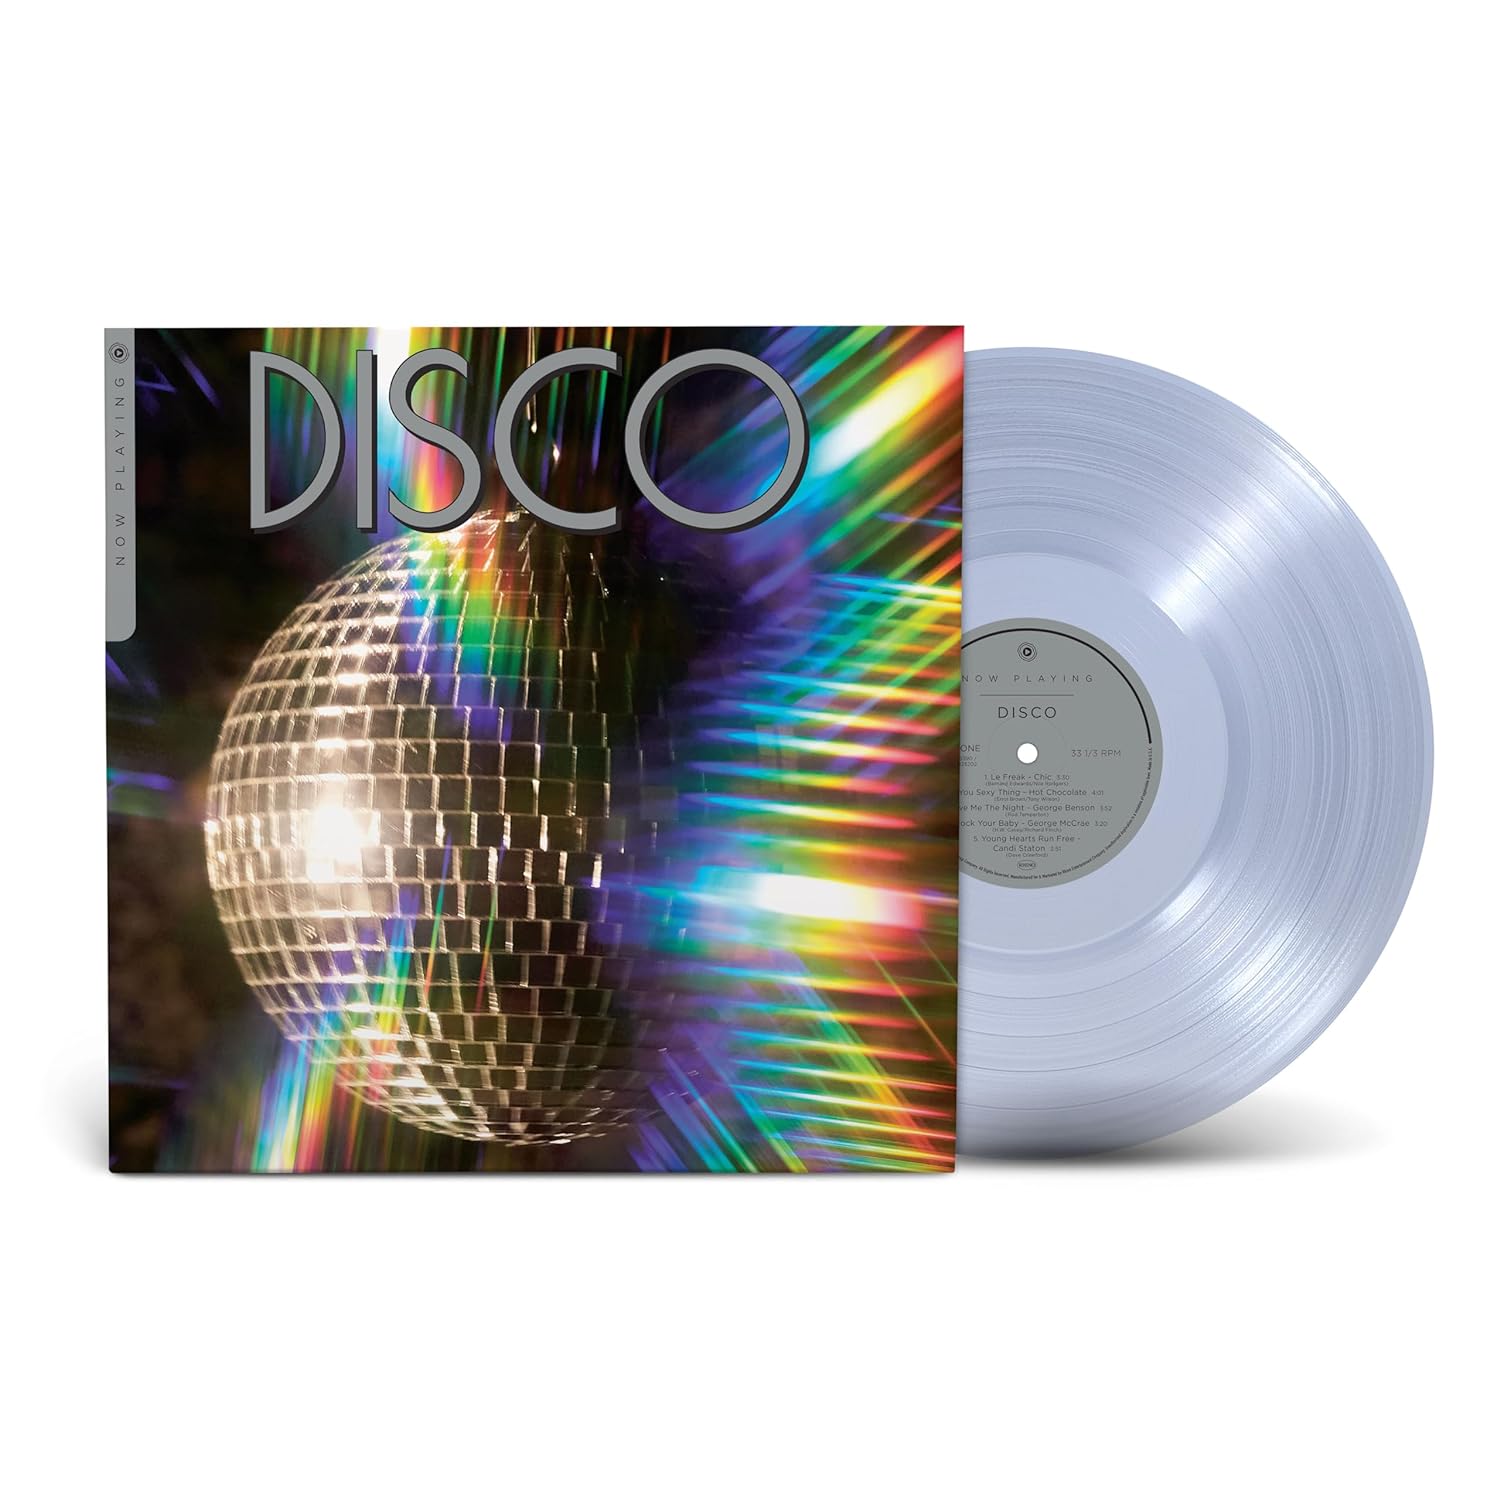 V./A. – DISCO NOW PLAYING glitter ball clear vinyl LP